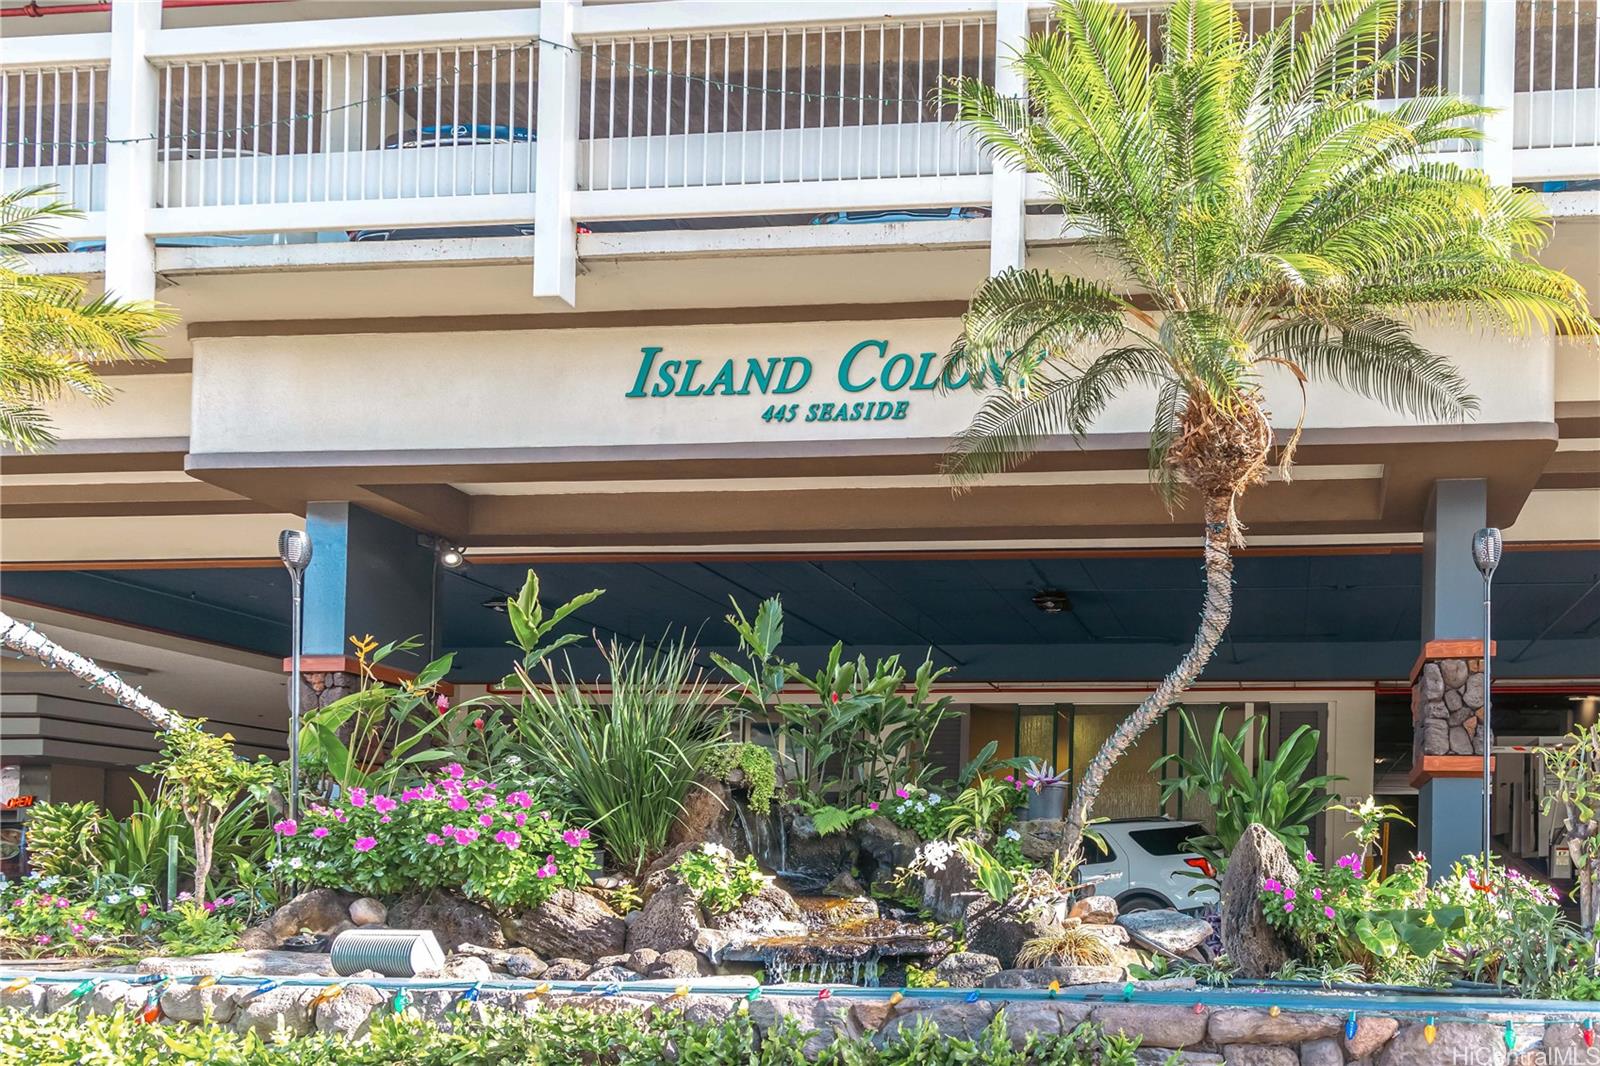 Island Colony 445 Seaside Avenue  Unit 1503